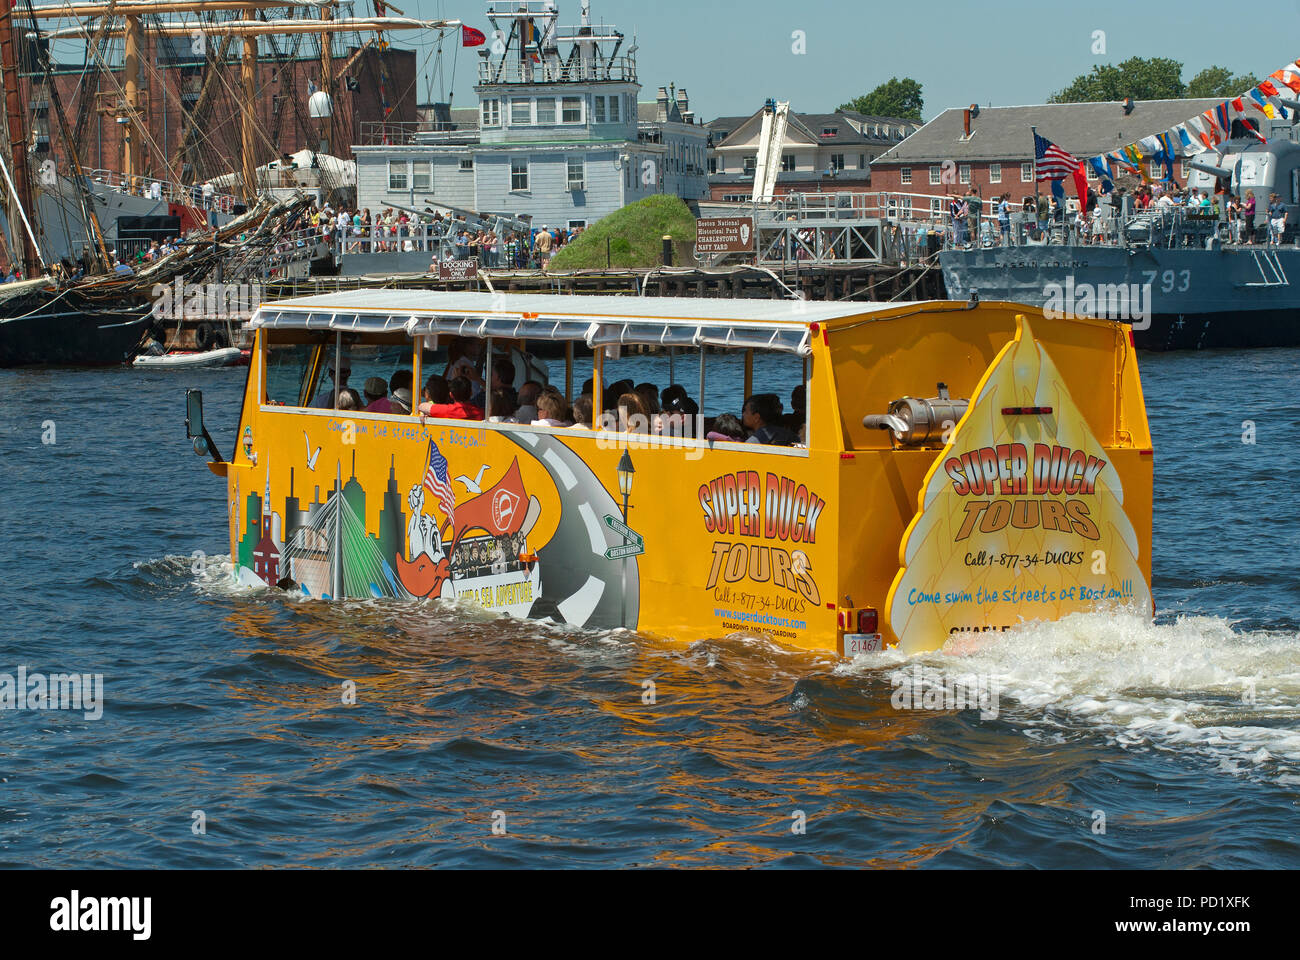 Super Duck Tours boat, an amphibious vehicle sailing on the Boston Harbor, Suffolk County, Massachusetts, USA Stock Photo